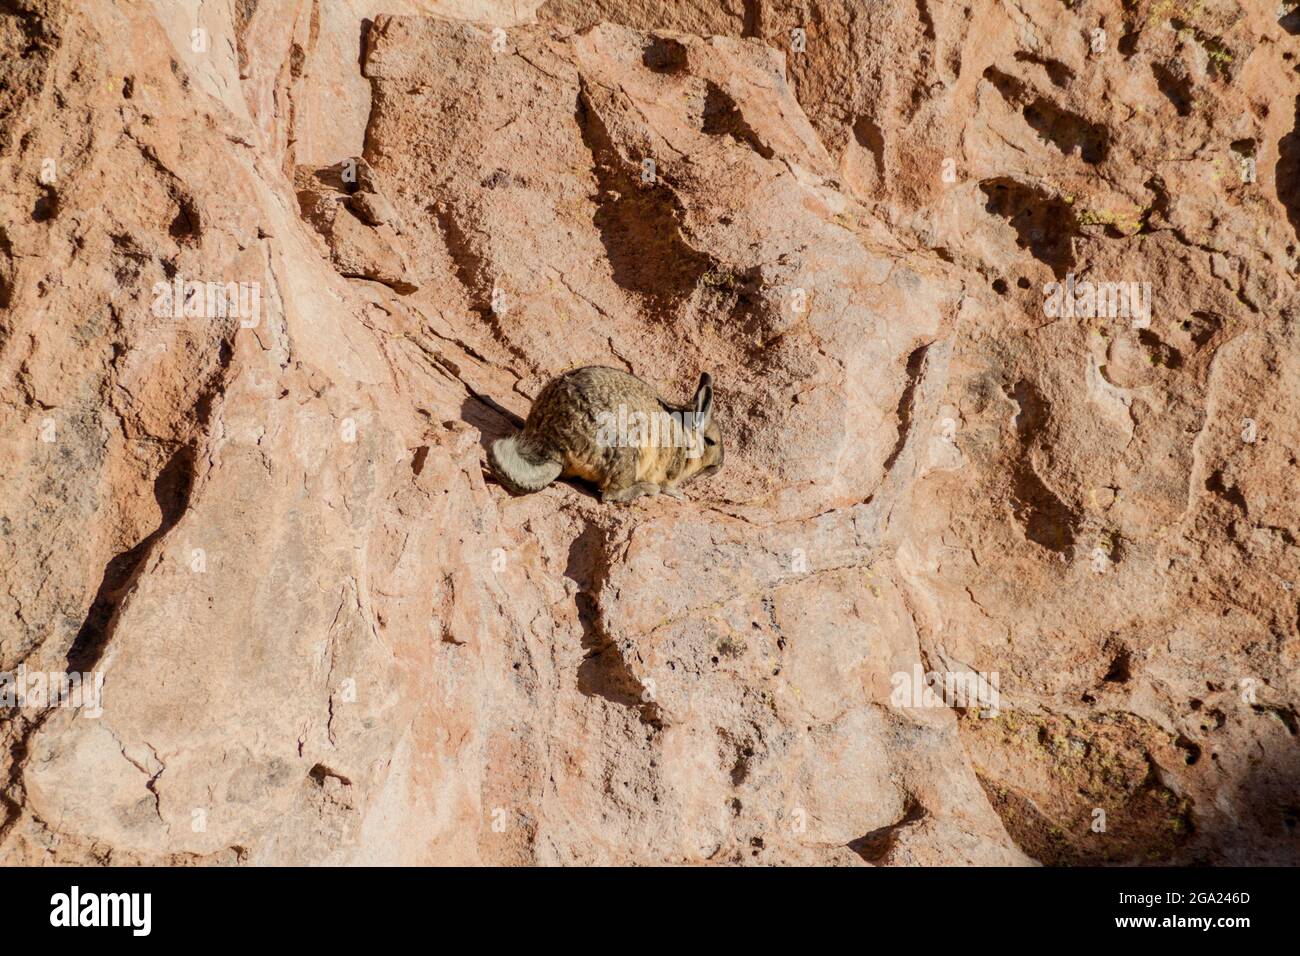 Southern viscacha (Lagidium viscacia) in the Sur Lipez desert, Bolivia Stock Photo